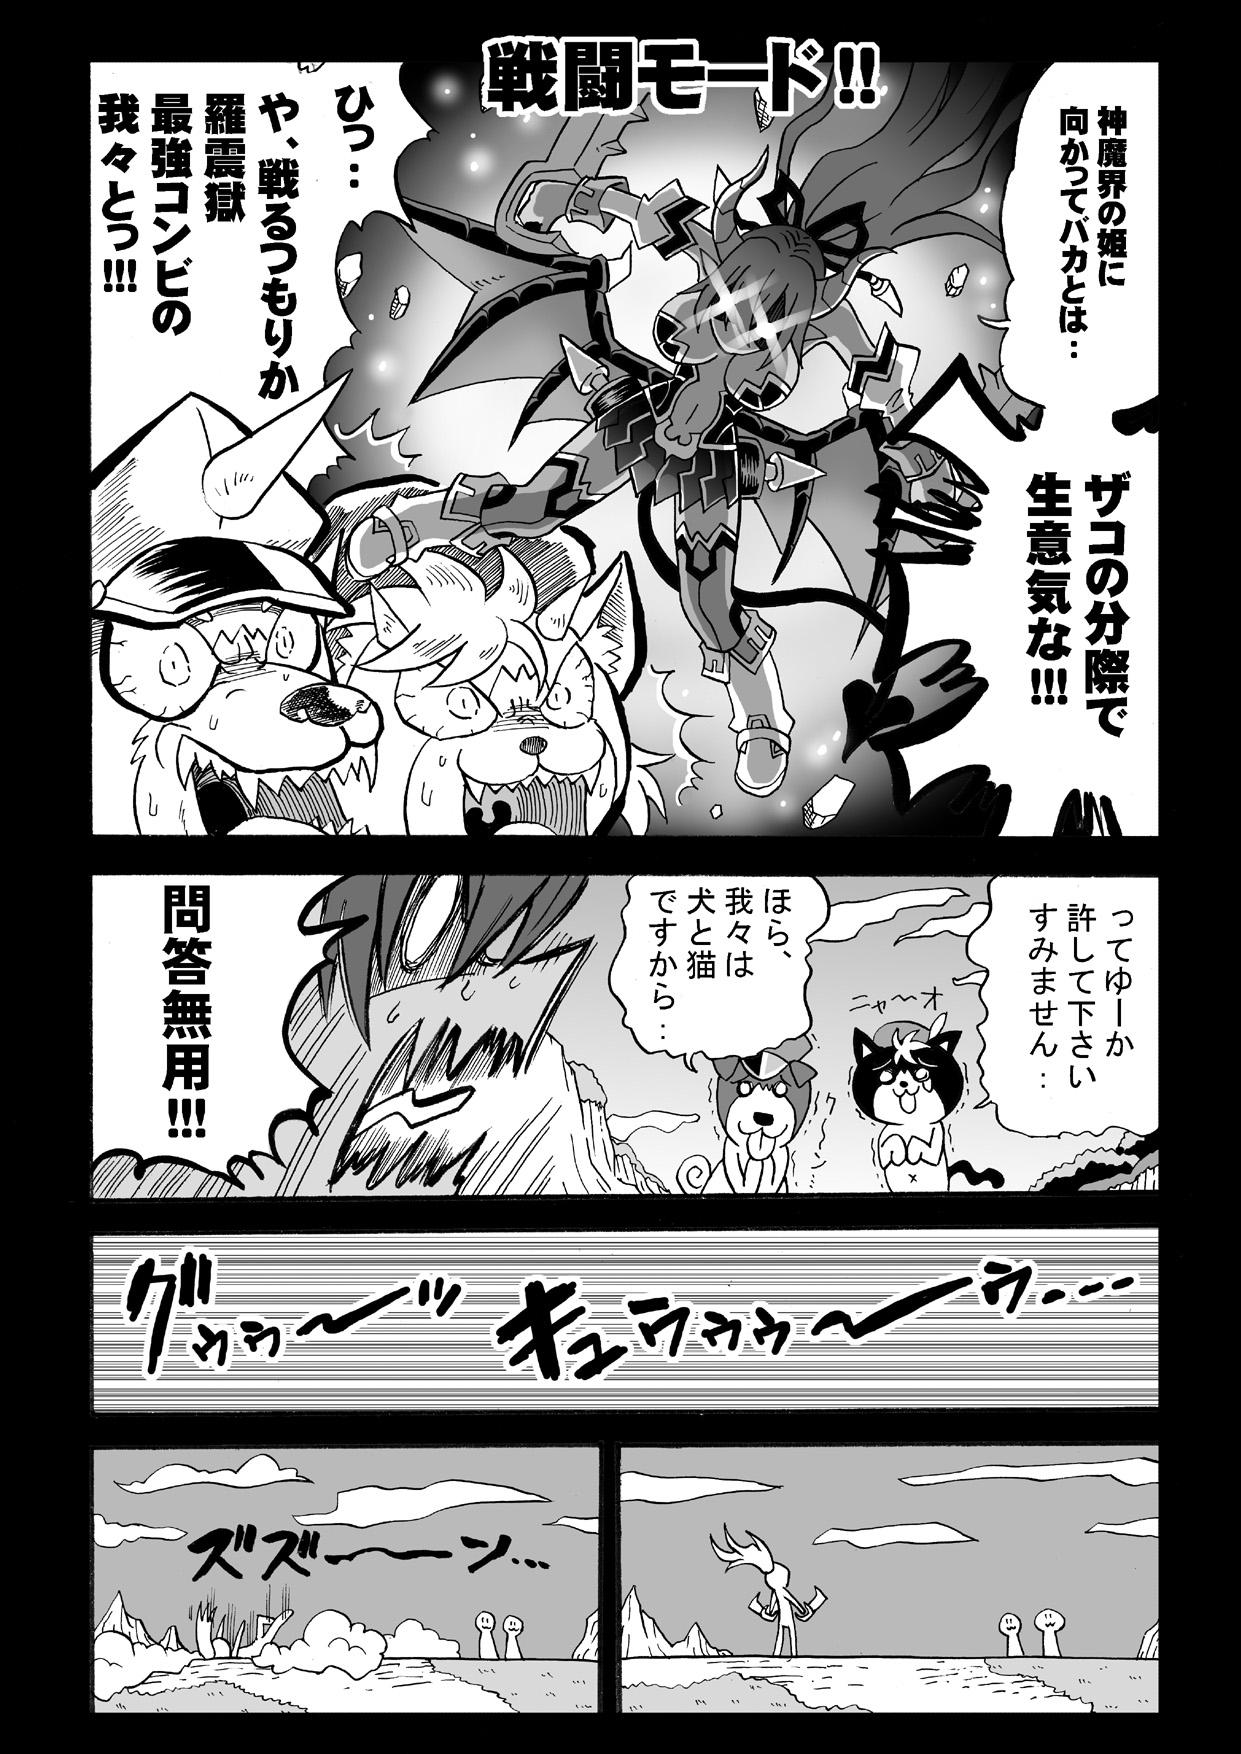 Family Roleplay 角と尻尾と屍と - Shinrabansho Forwomen - Page 4